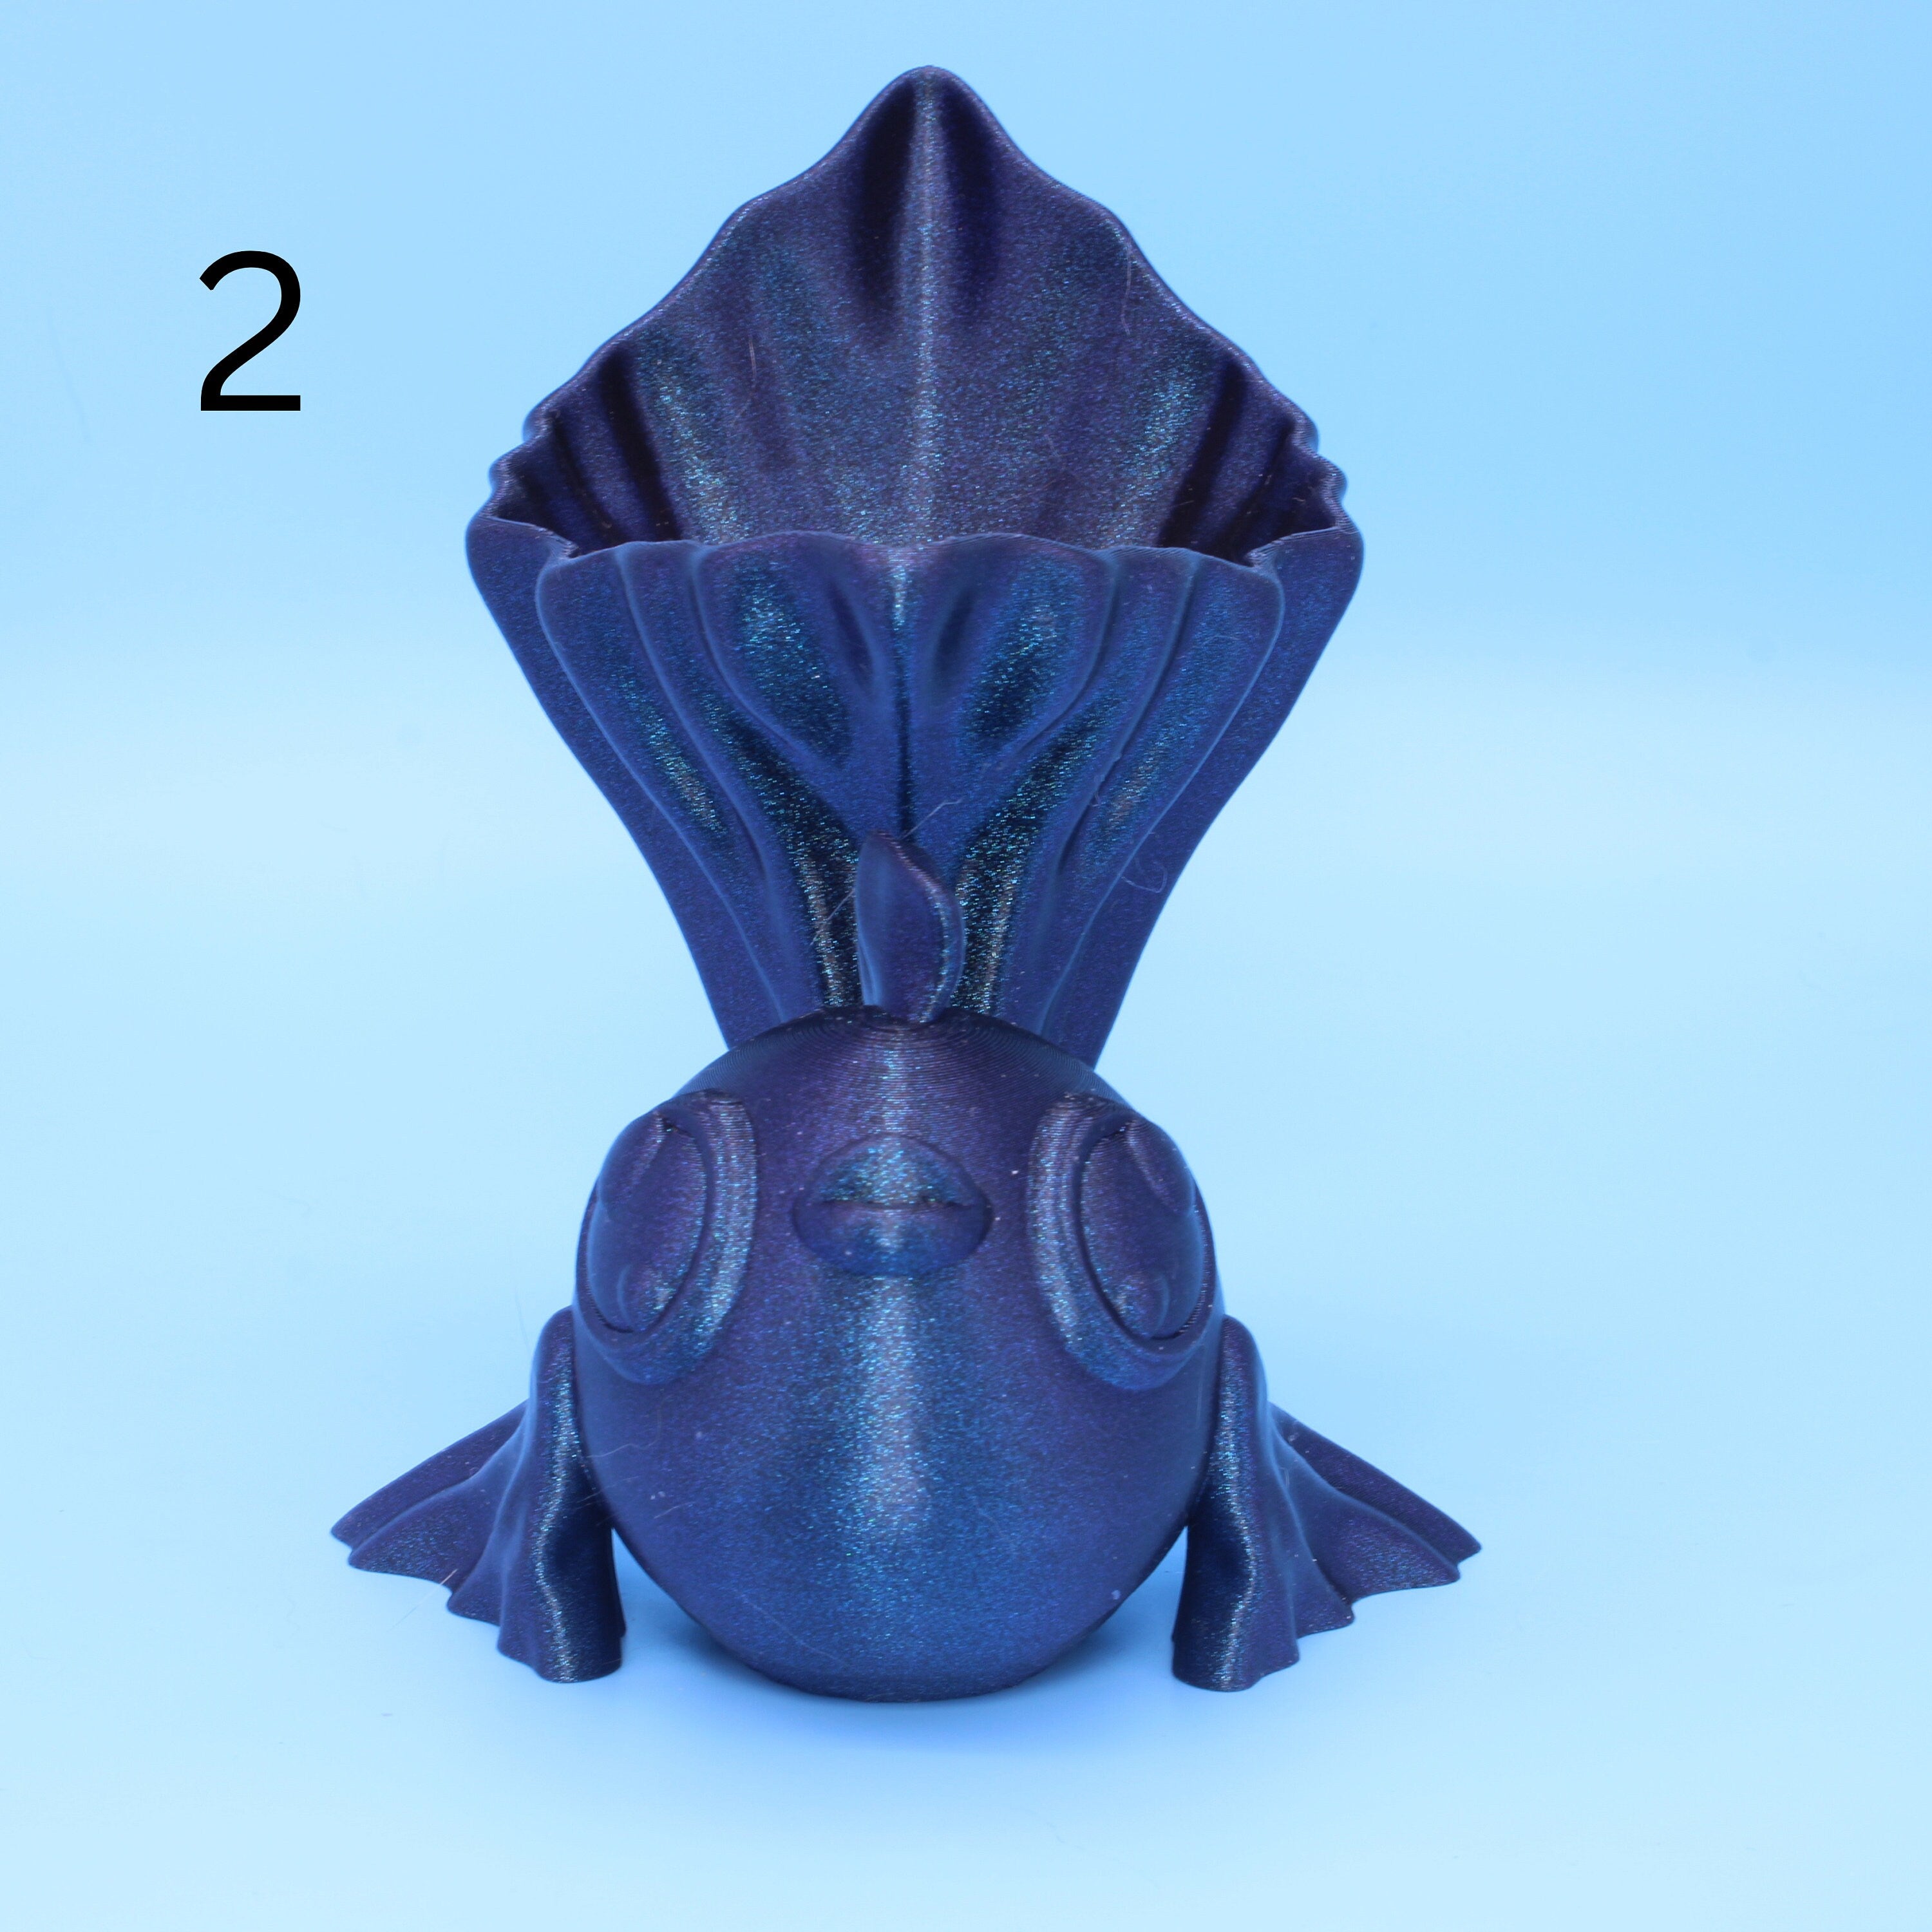 Fish Plant Holder, 3D Printed Flower pot for succulents